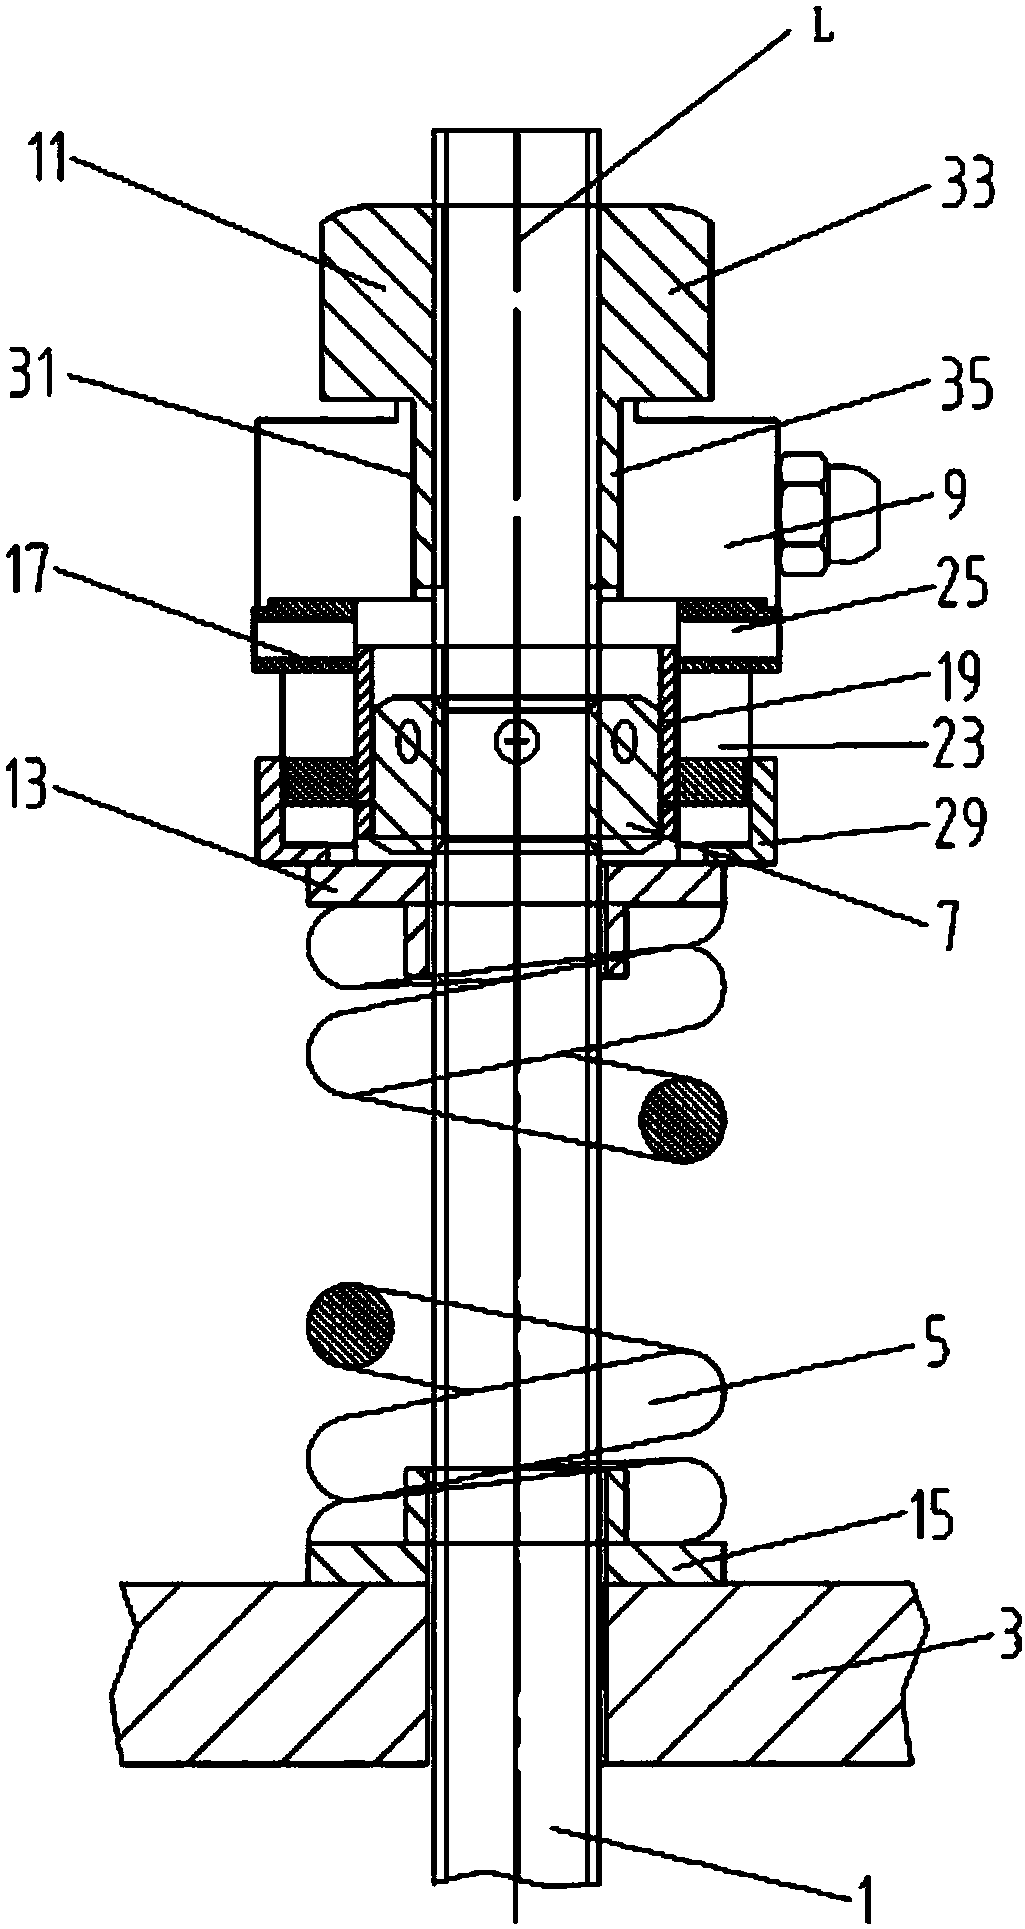 Elevator suspension rope tension measurement and adjustment mechanism